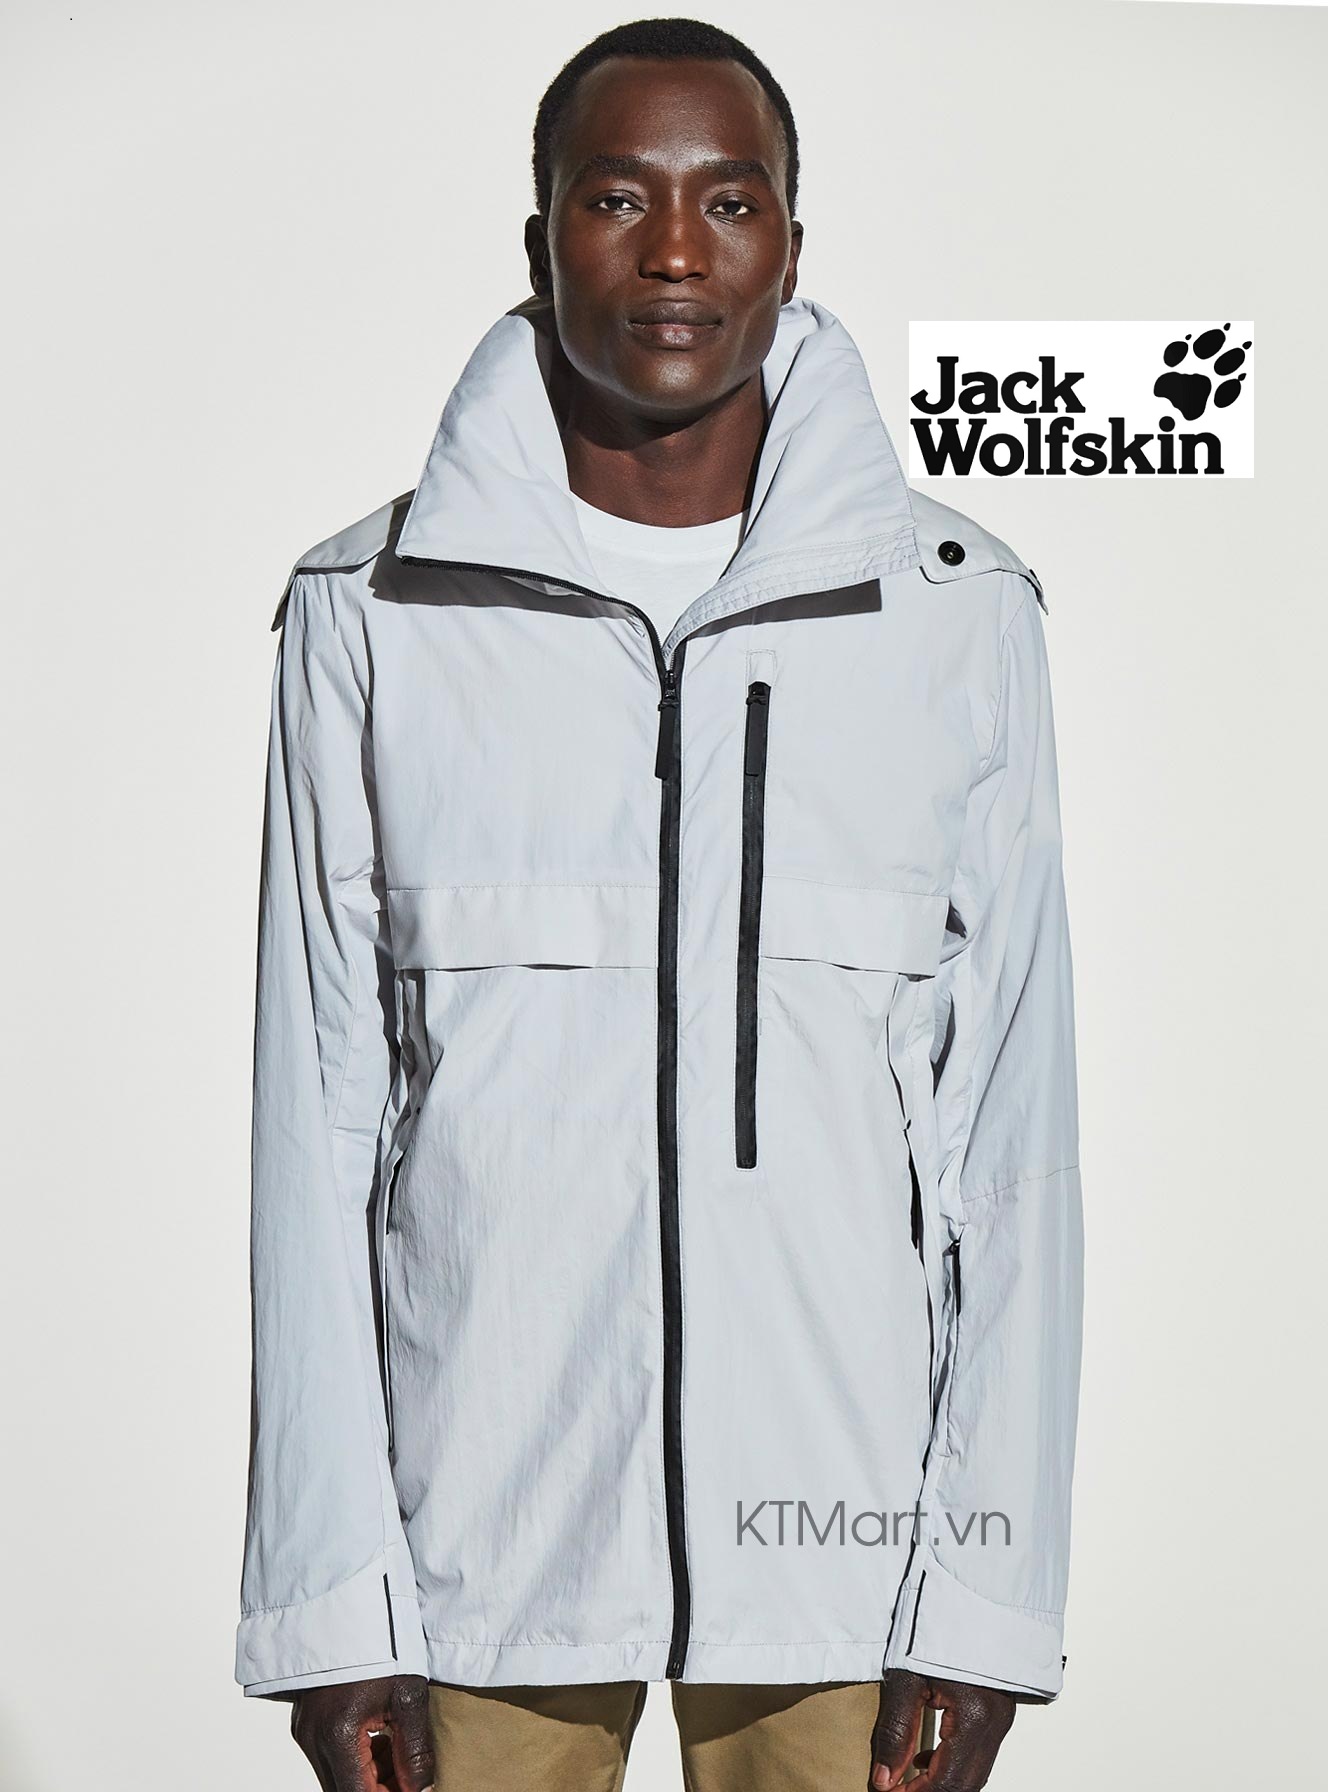 Jack Wolfskin Luxor Jacket Men 1306641 Jack Wolfskin Tech Lab size M US